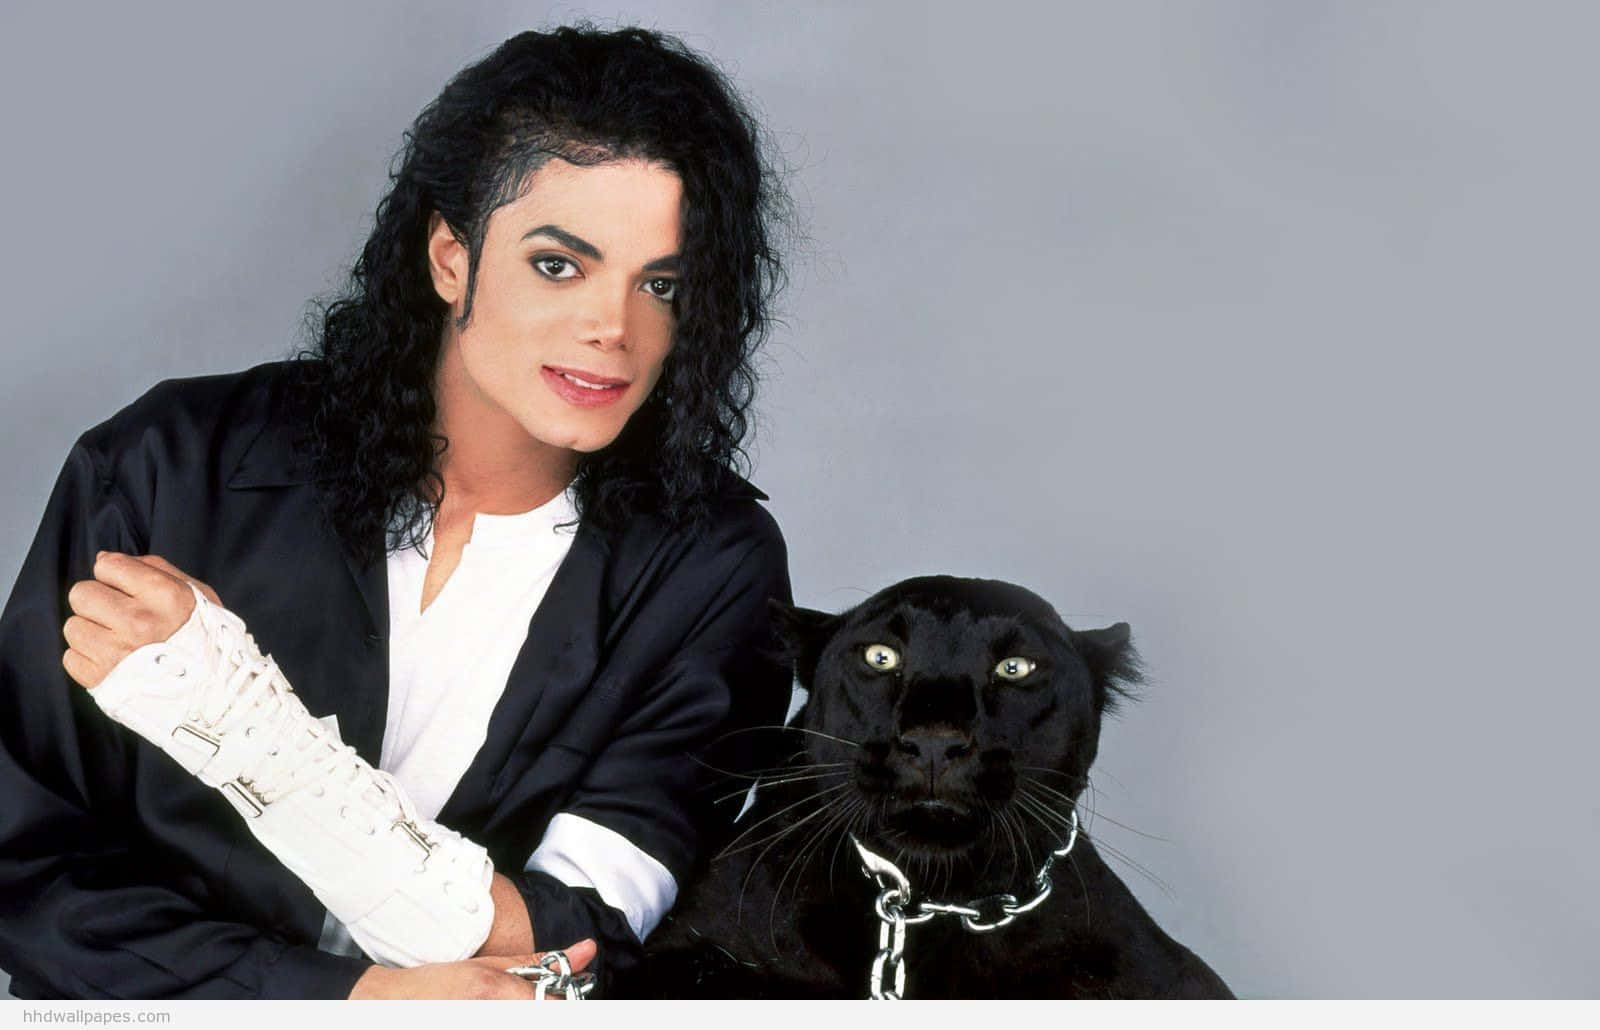 Michael Jackson in High Spirits